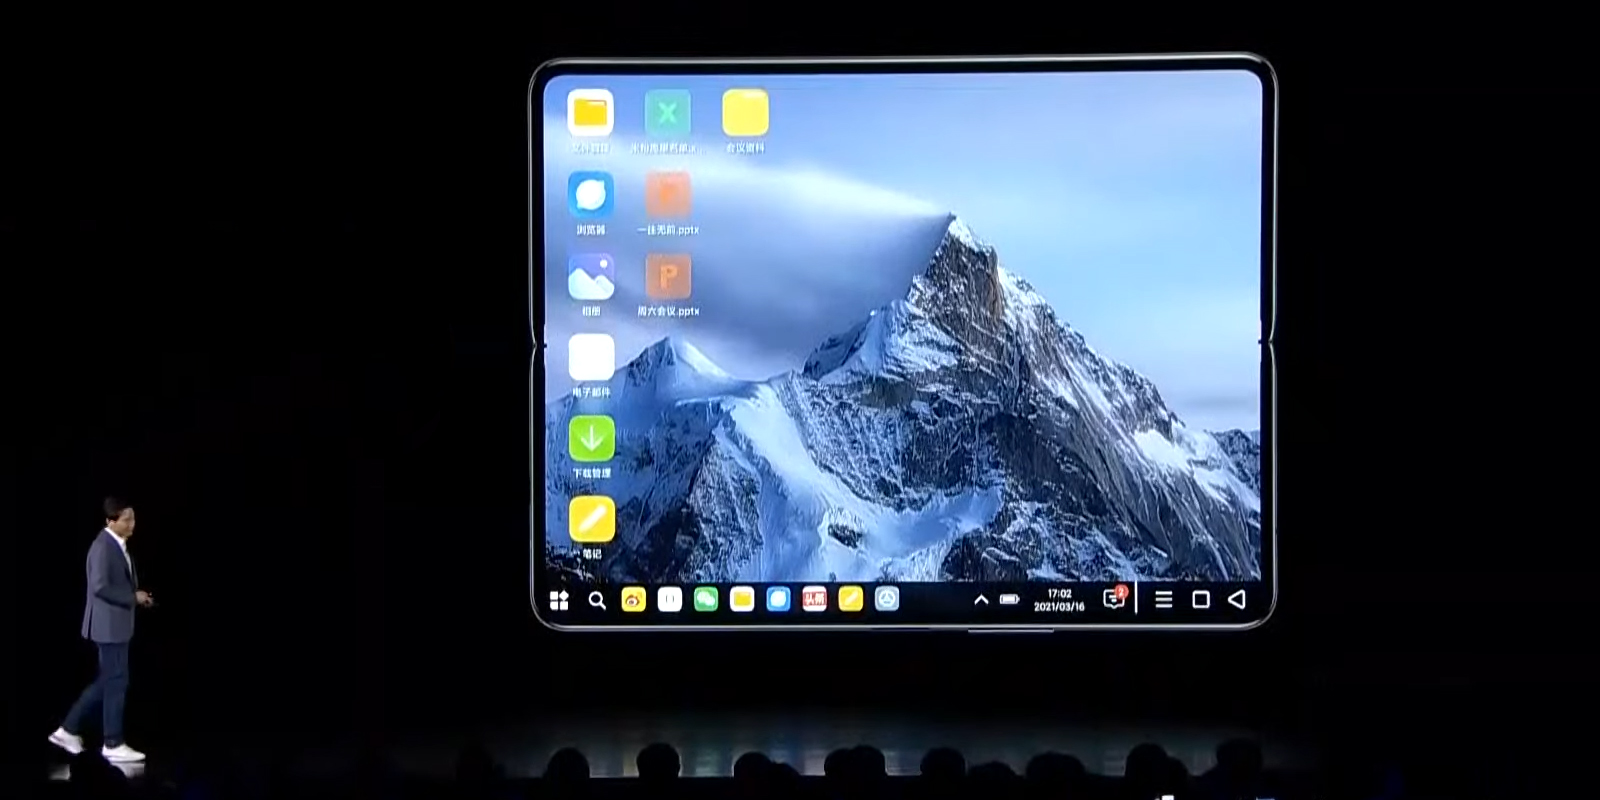 Xiaomi представила складной смартфон Mi MIX Fold. Это аналог Galaxy Z Fold 2